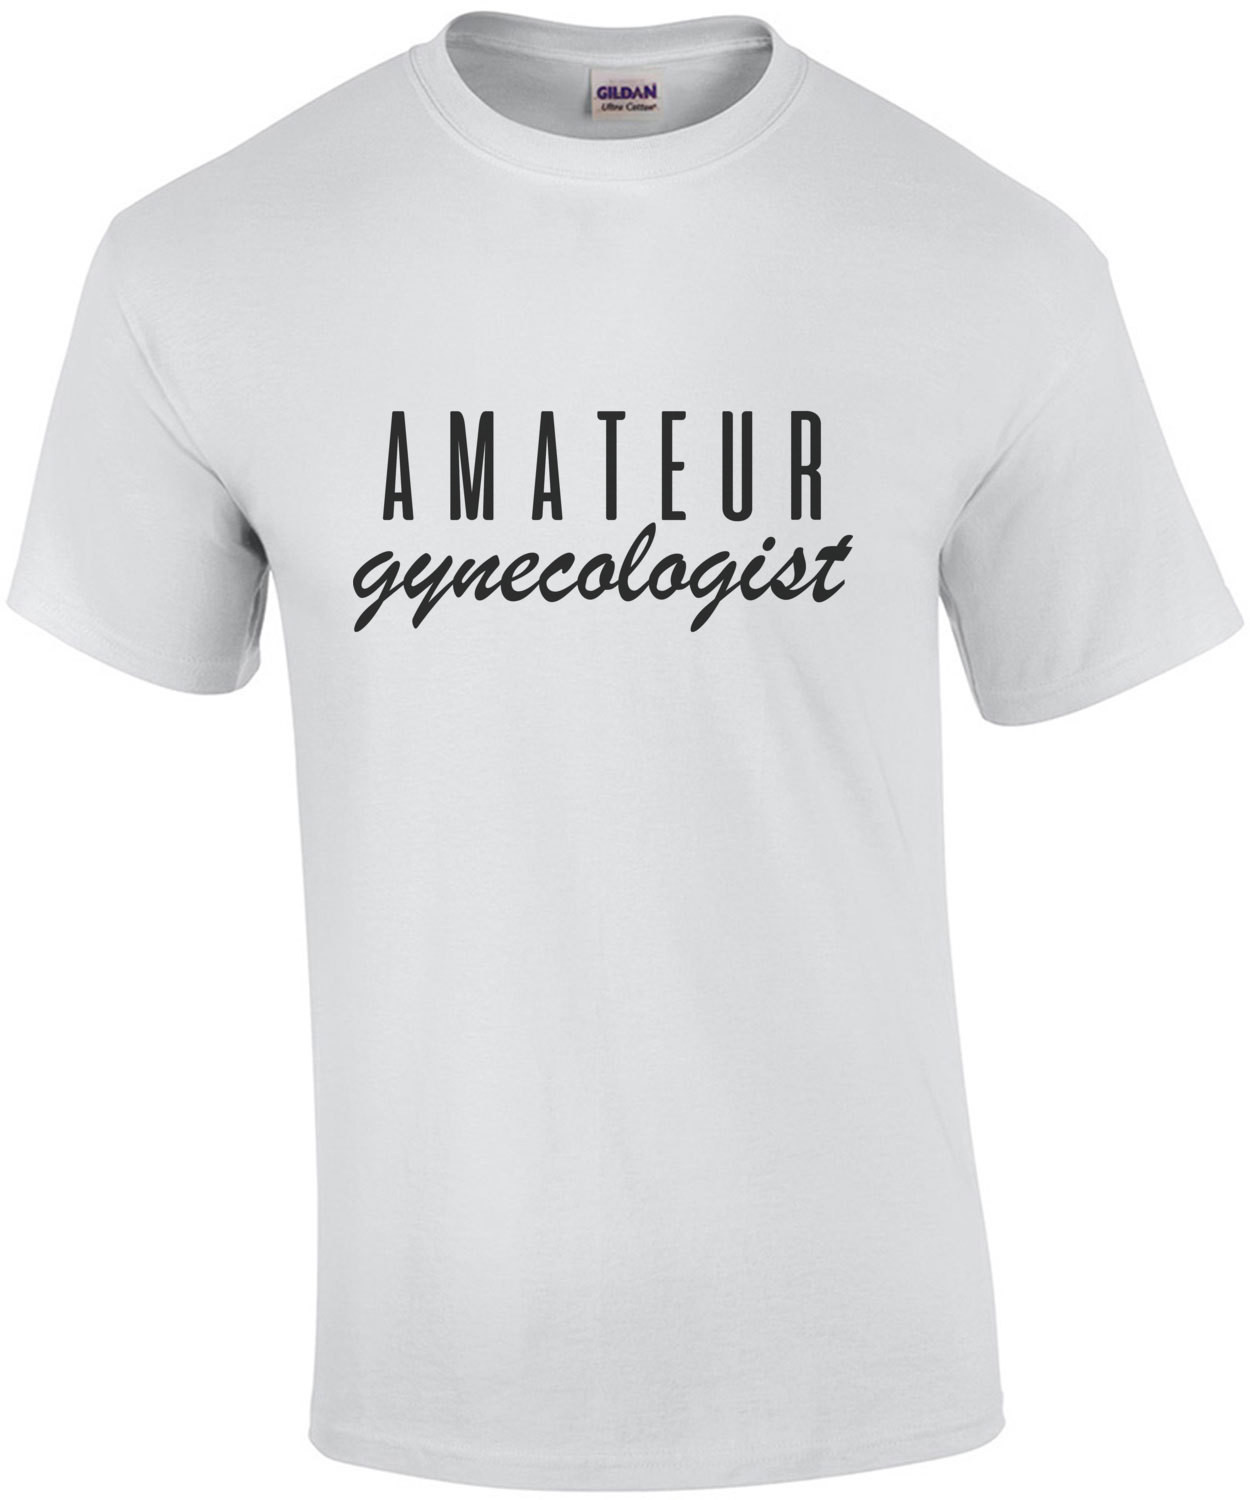 Amateur Gynecologist - Funny T-Shirt